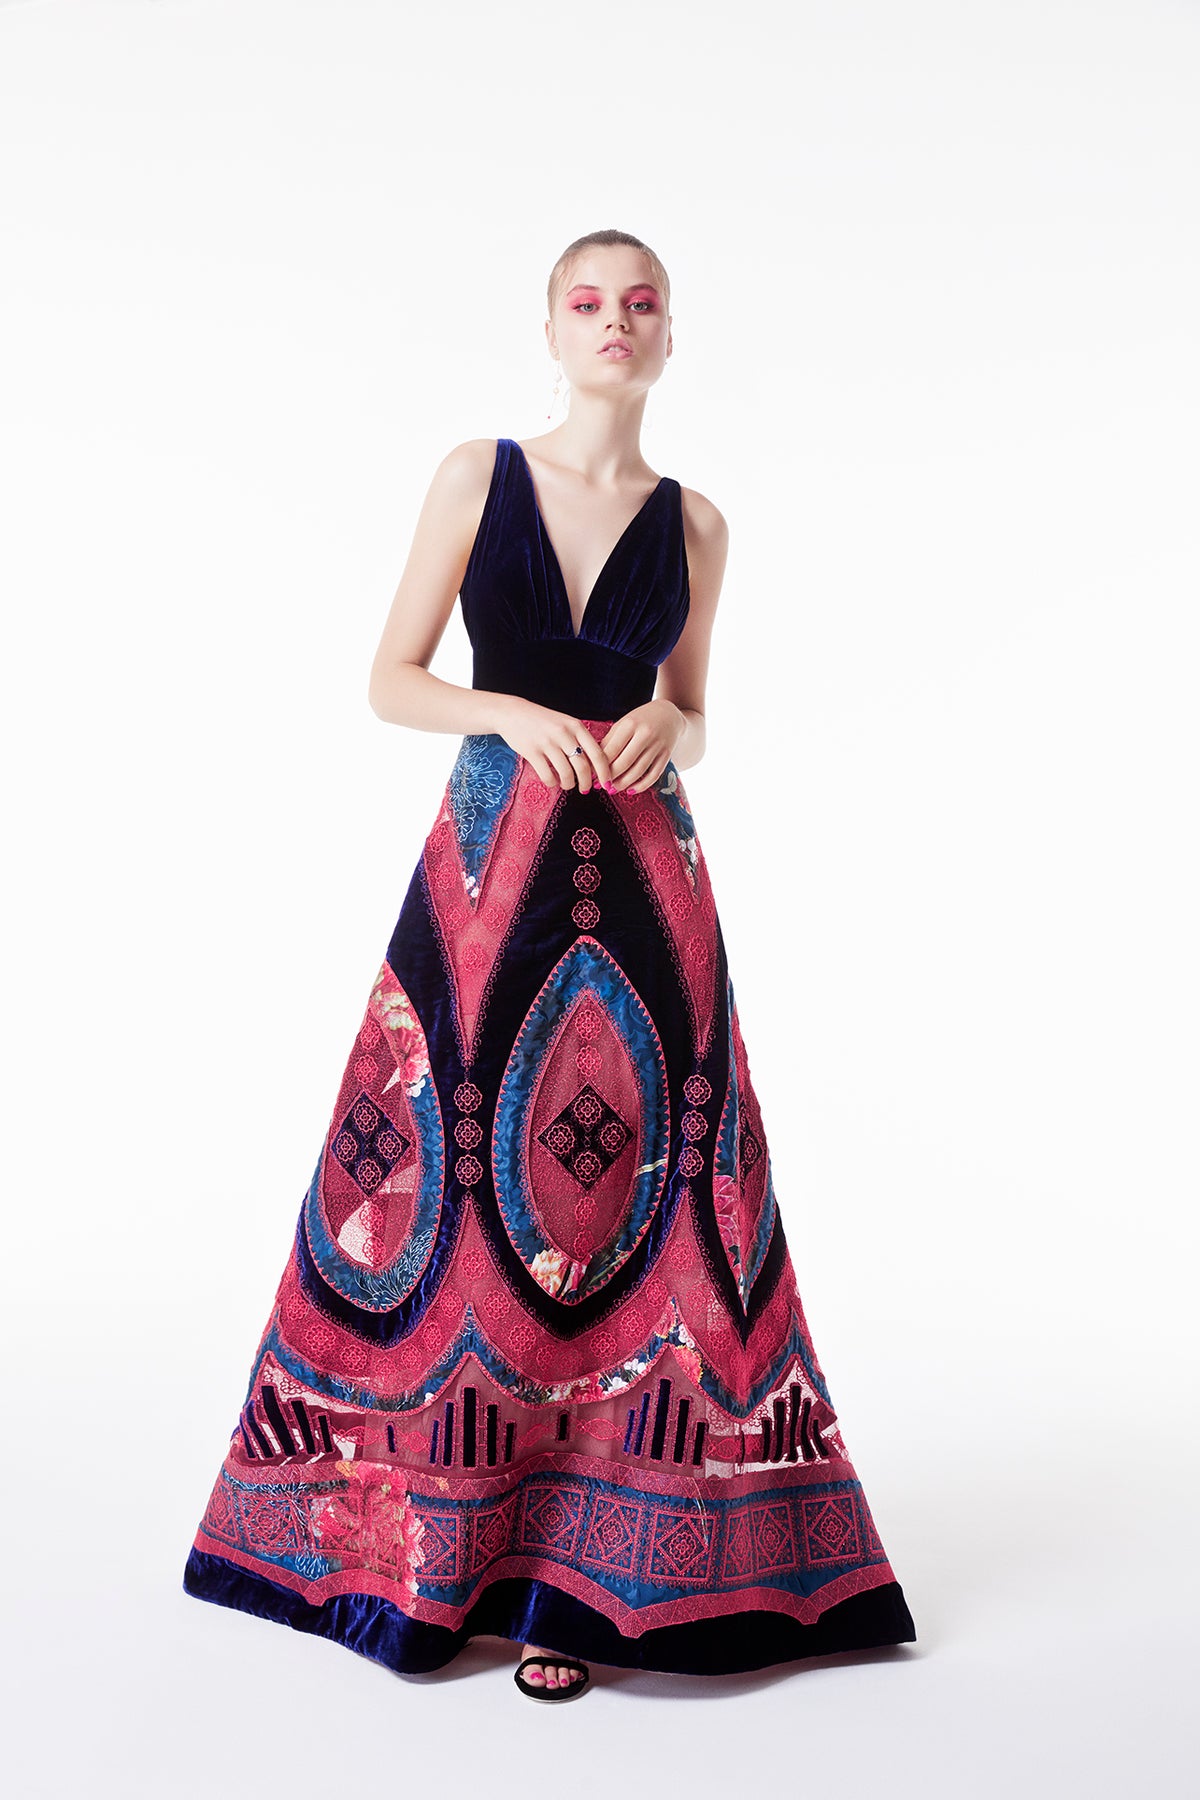 Designer Gala Gowns | Gala Dresses Online | Suzanne Harward